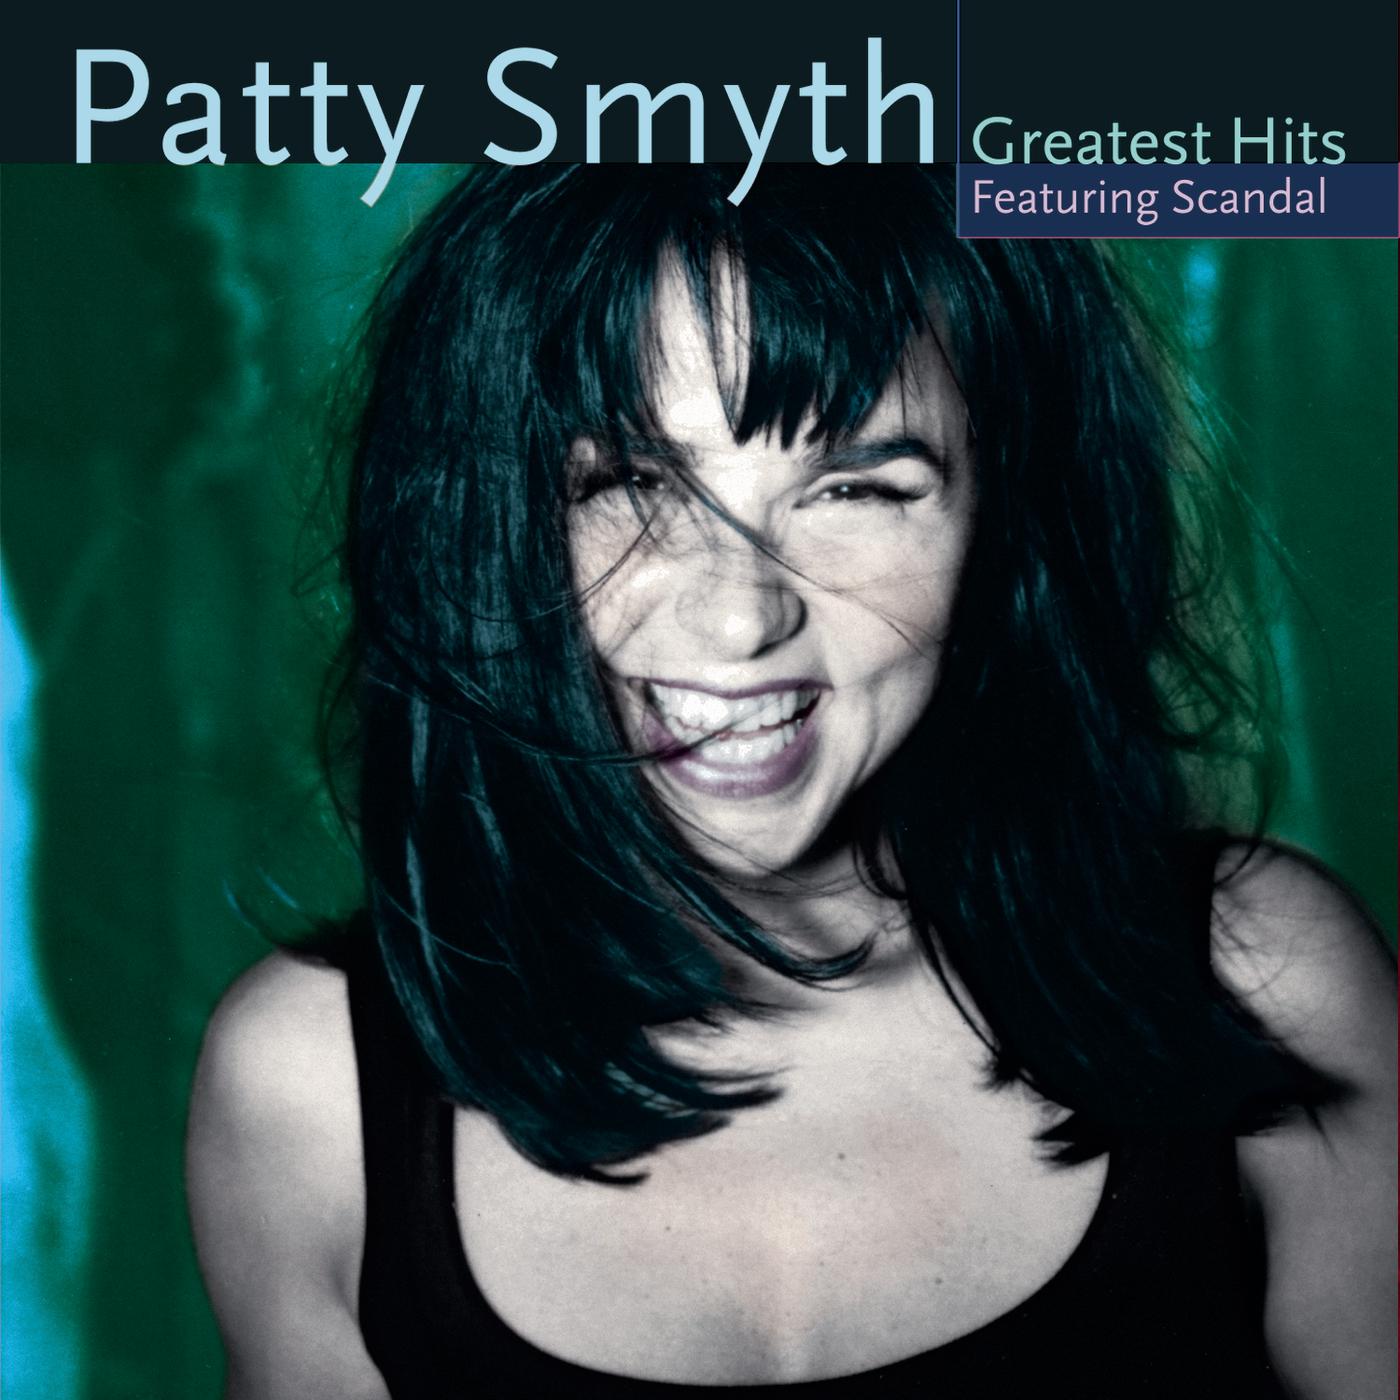 Patty Smyth - Sometimes Love Just Ain't Enough (Album Version)